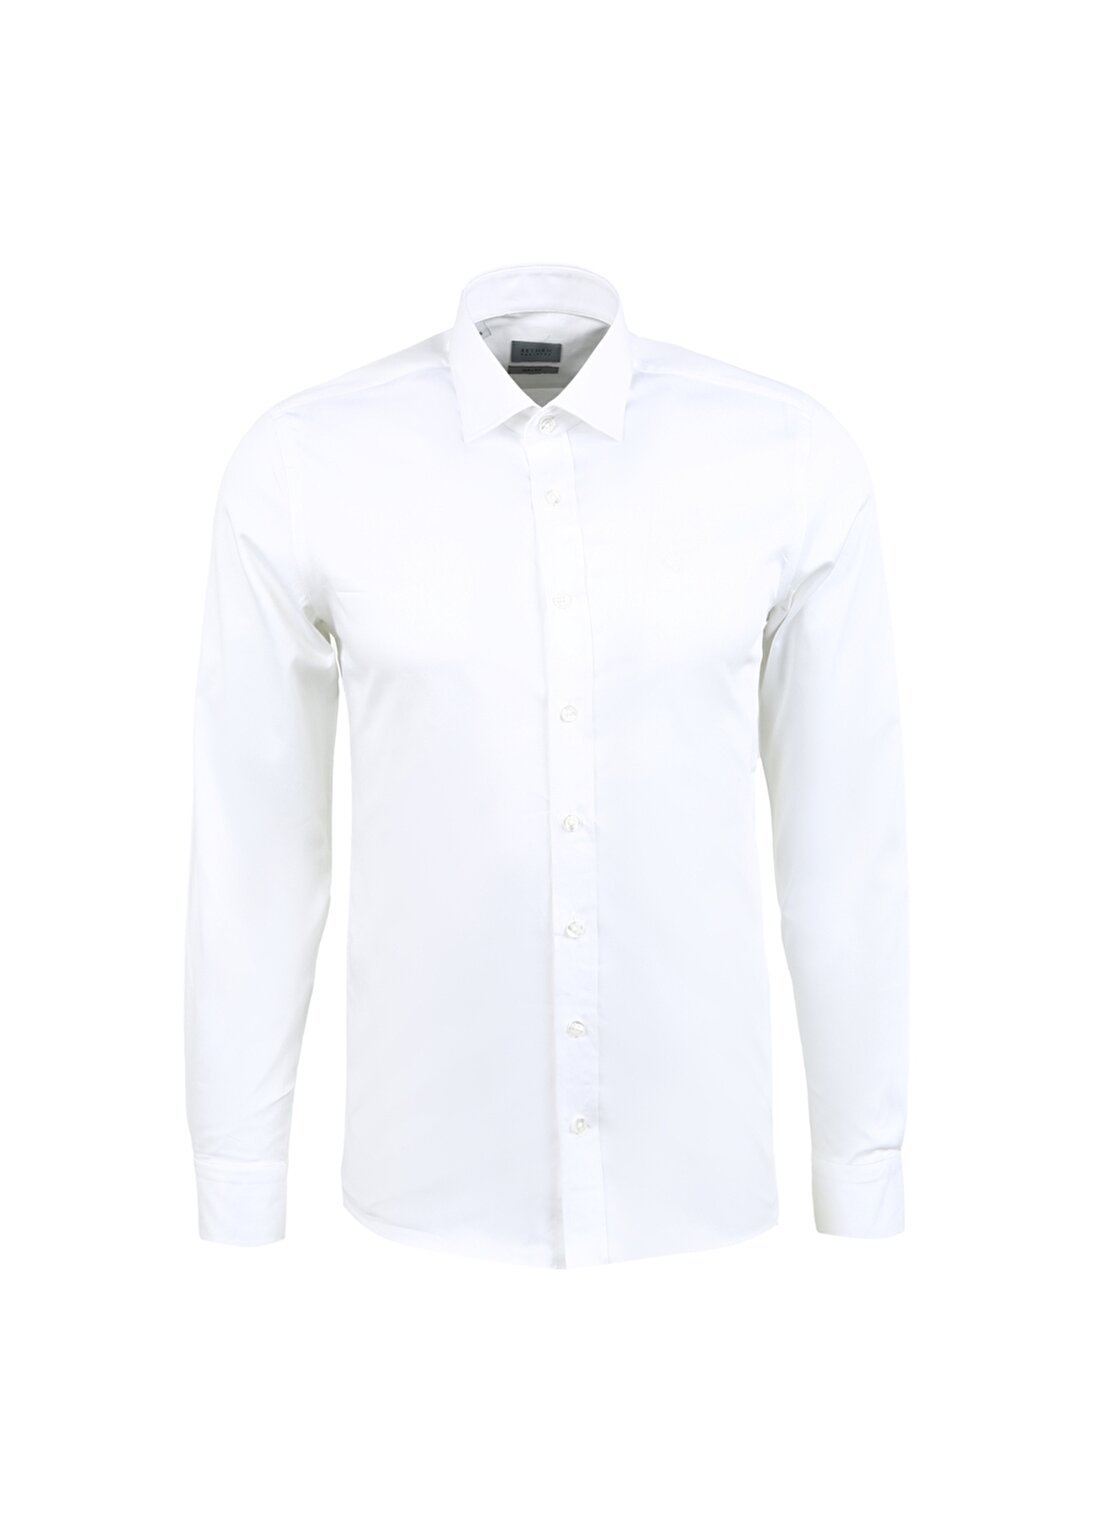 Beymen Business Slim Fit Klasik Gömlek Yaka Beyaz Erkek Gömlek 4B2000000011